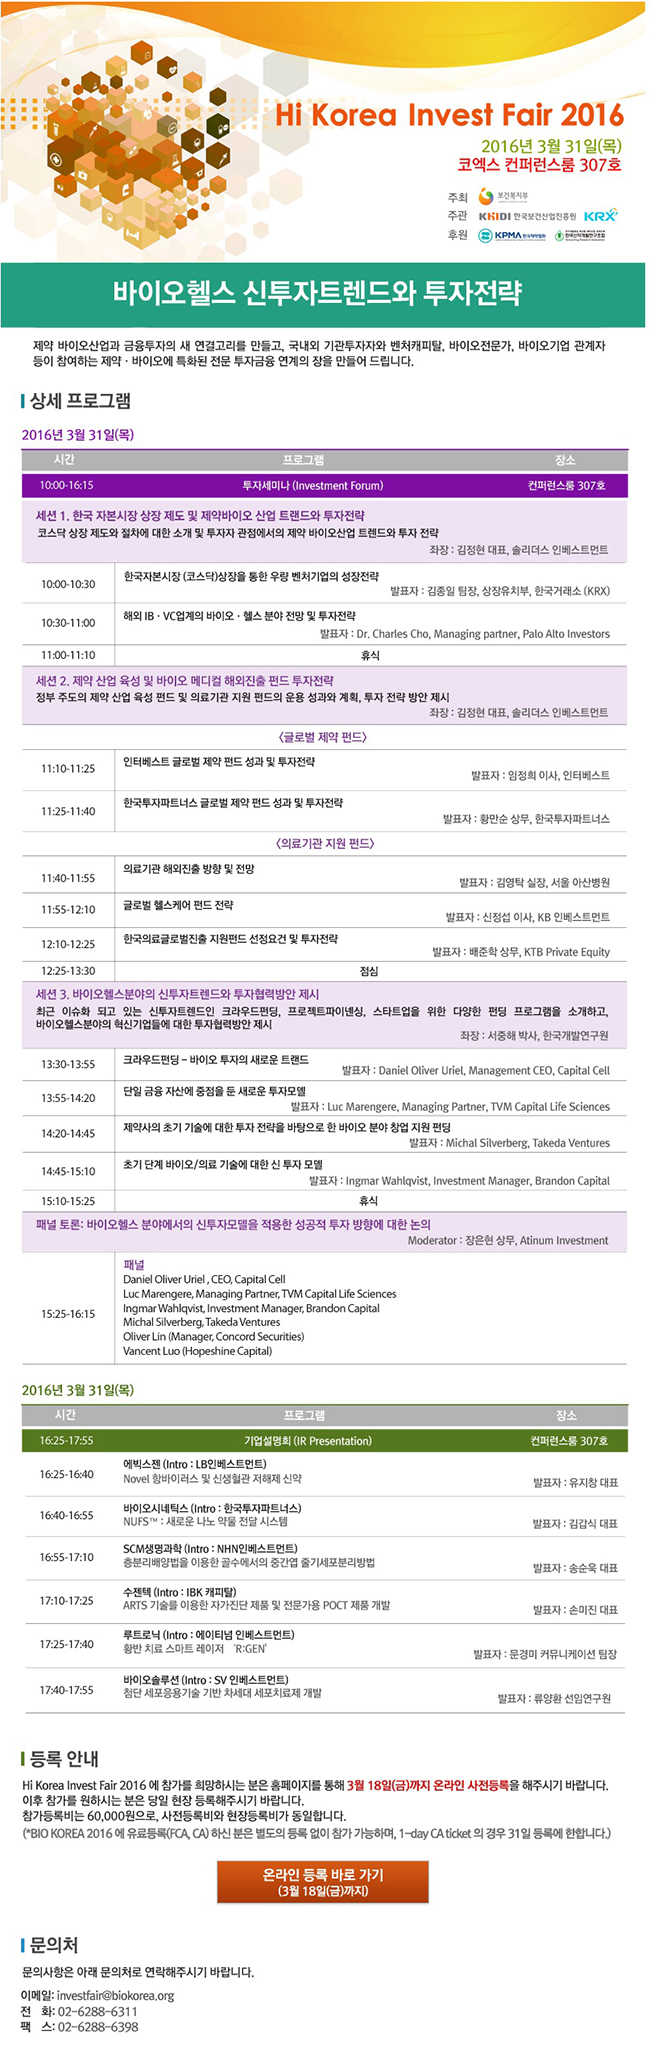 Hi Korea Invest Fair 2016 (국문) - 상세내용 첨부파일참조